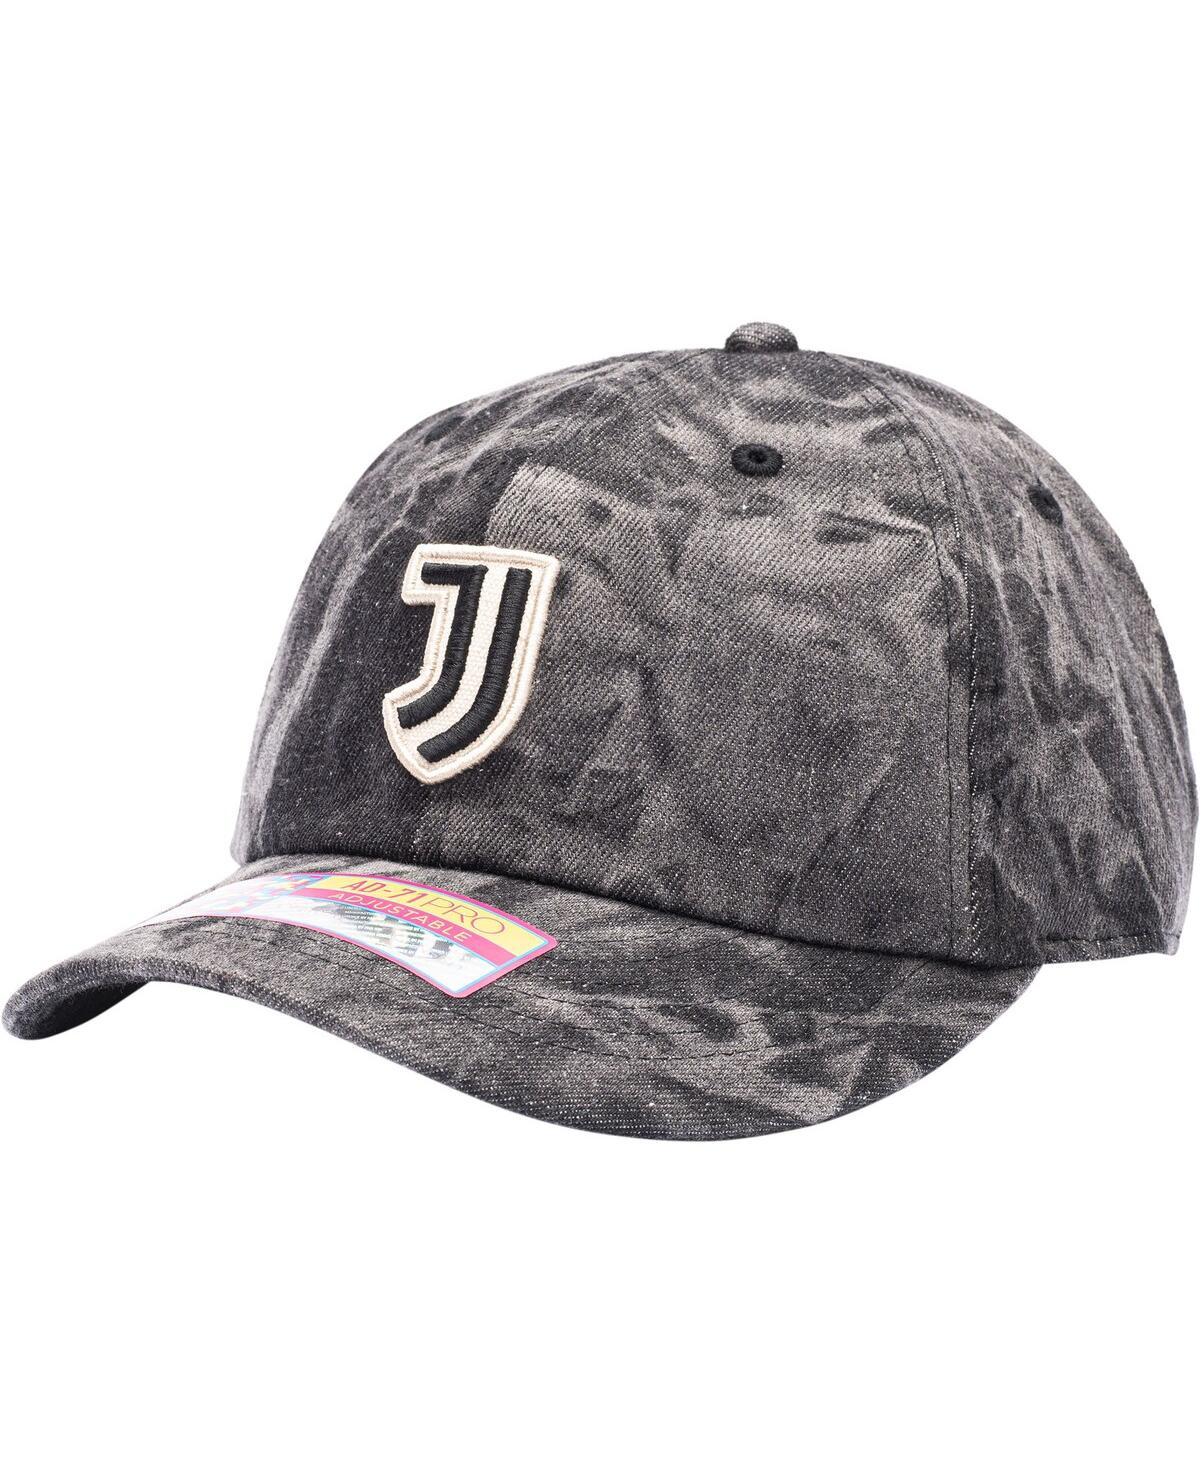 Shop Fan Ink Men's Black Juventus Club Ranch Adjustable Hat